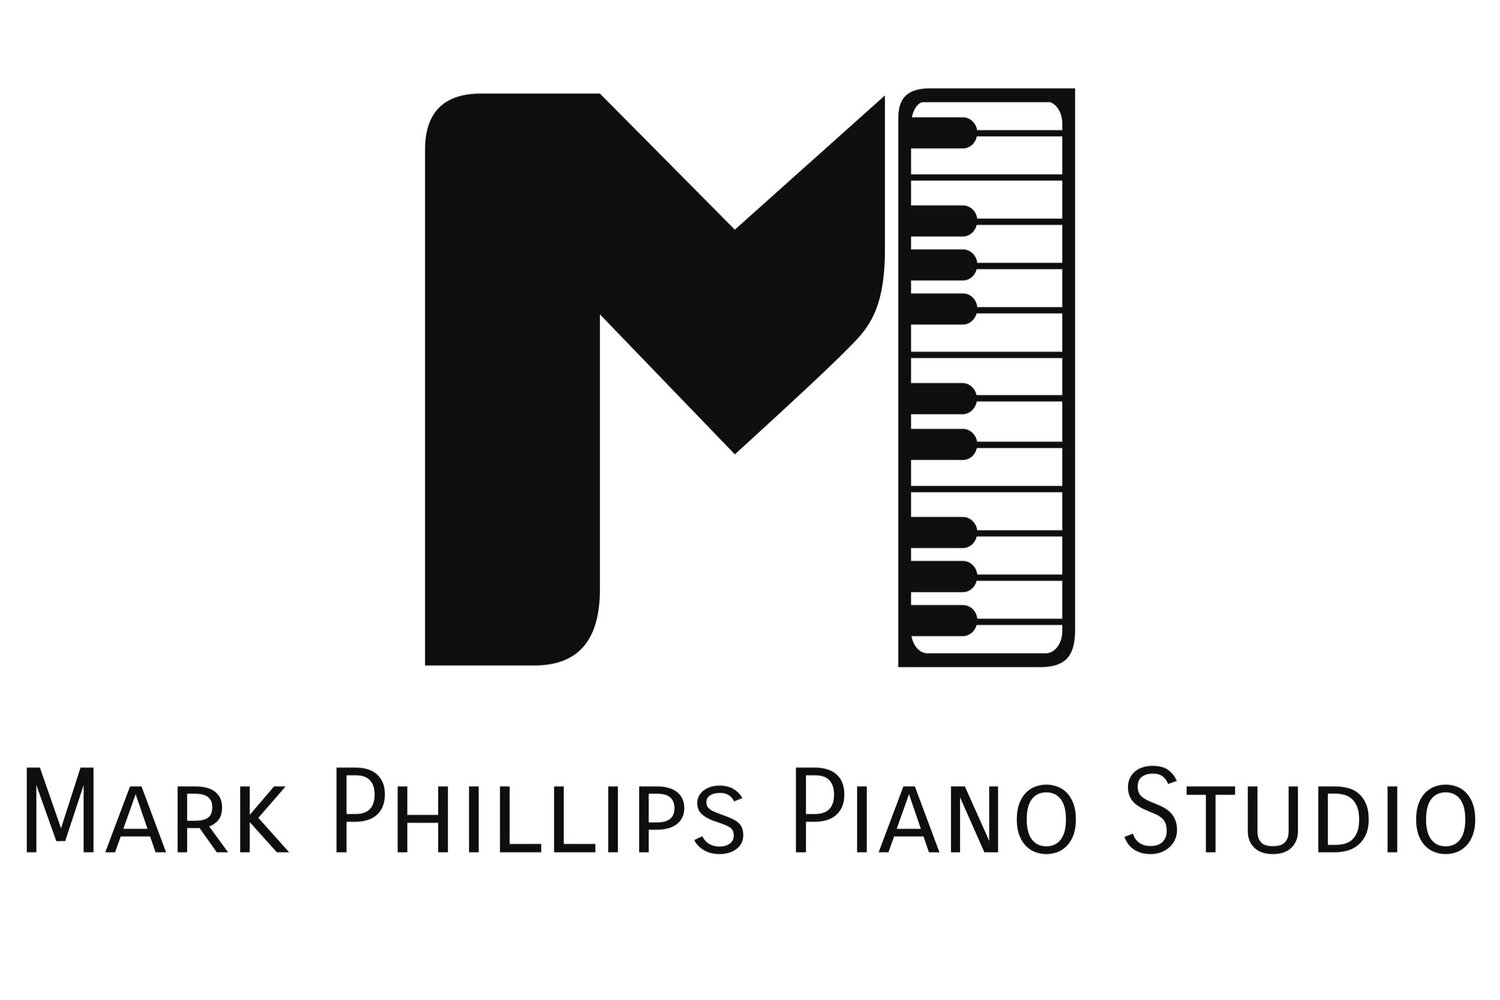 Mark Phillips Piano Studio